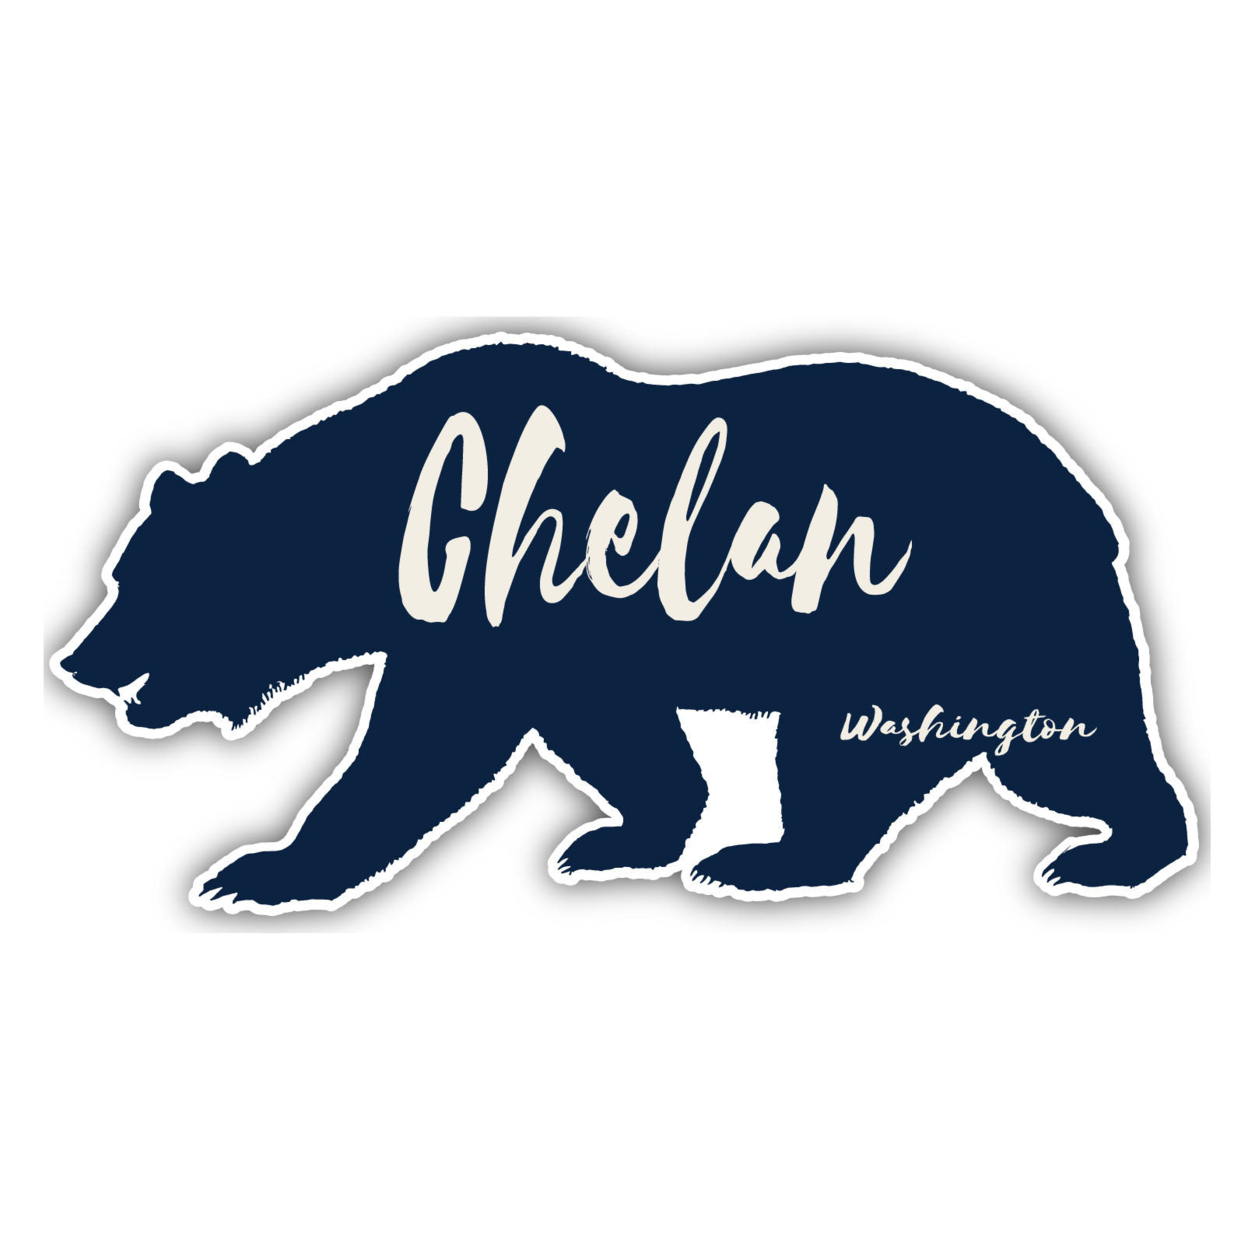 Chelan Washington Souvenir Decorative Stickers (Choose Theme And Size) - 4-Pack, 4-Inch, Tent